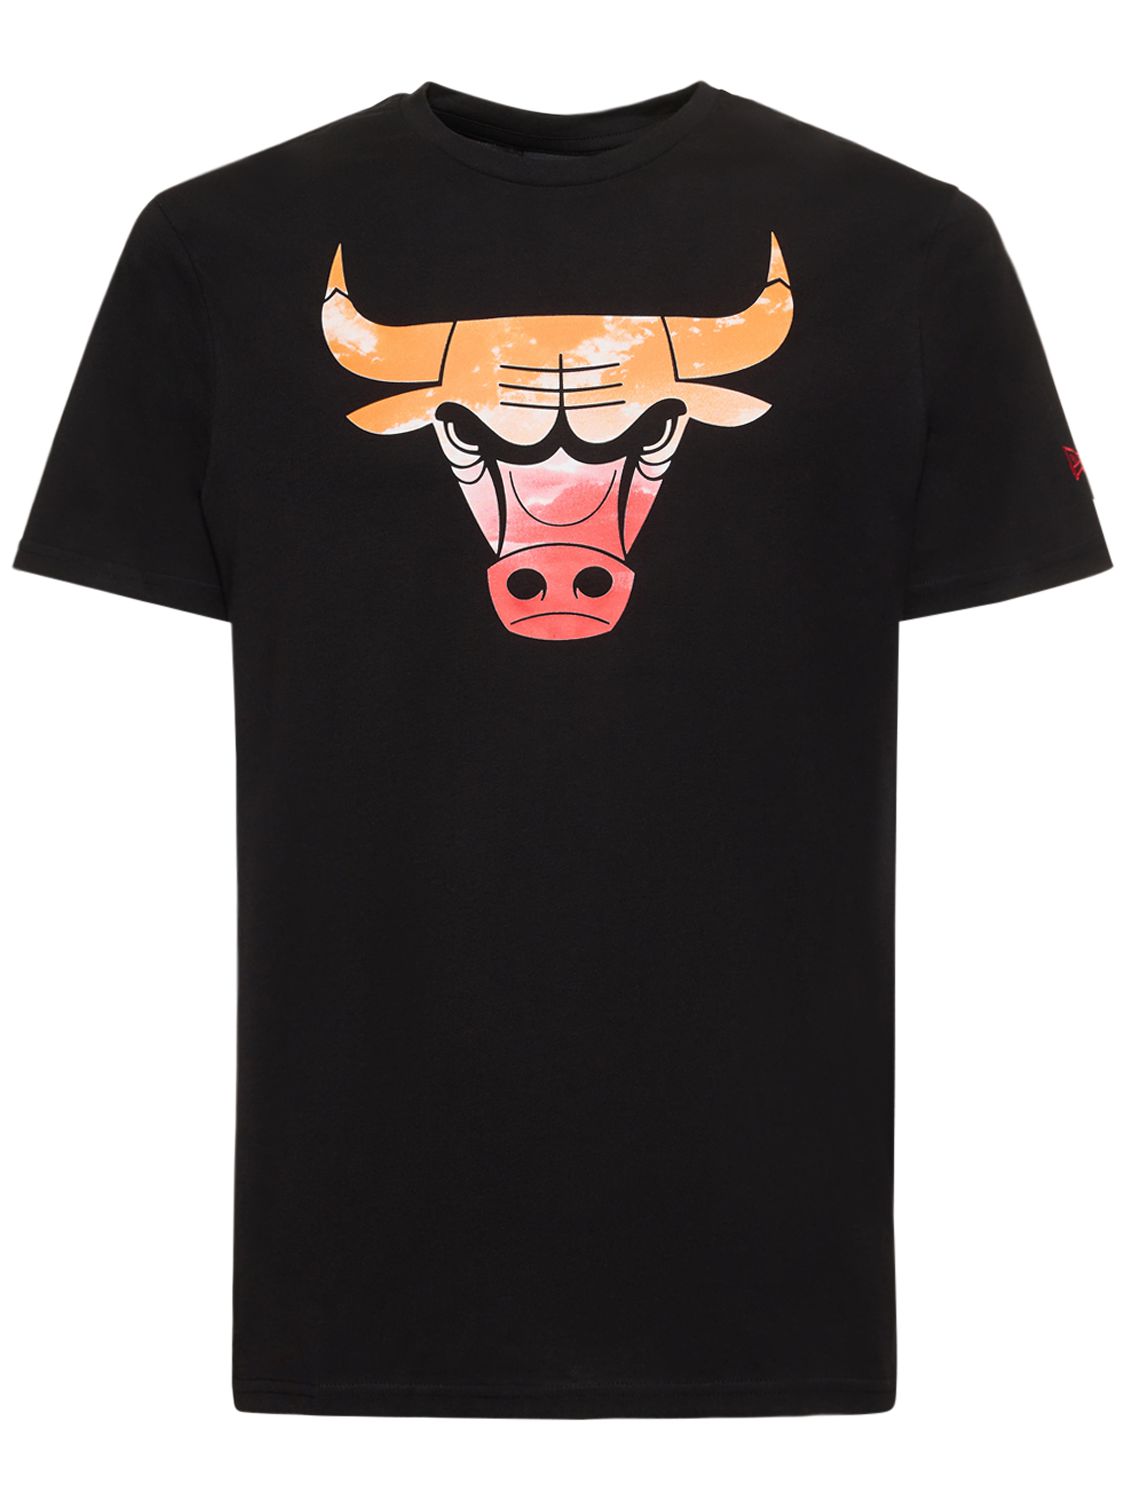 Chicago Bulls Printed Cotton T-shirt